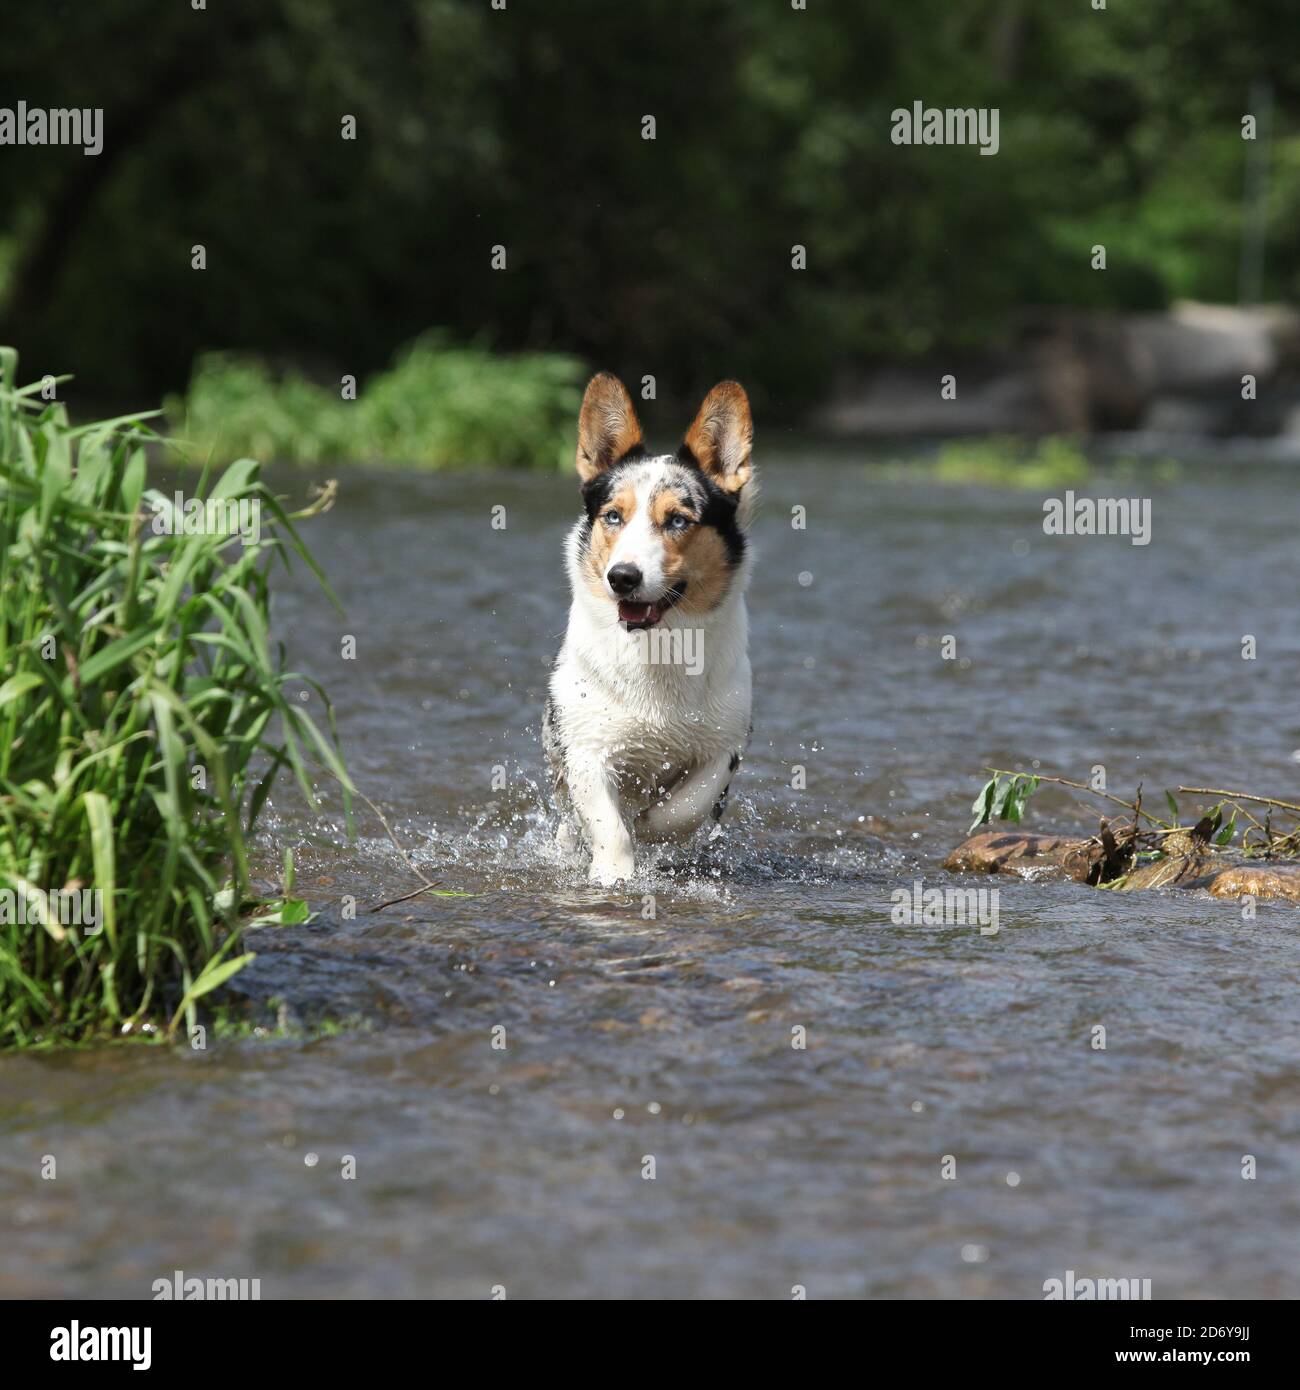 Welsh Corgi Cardigan running in water Stock Photo